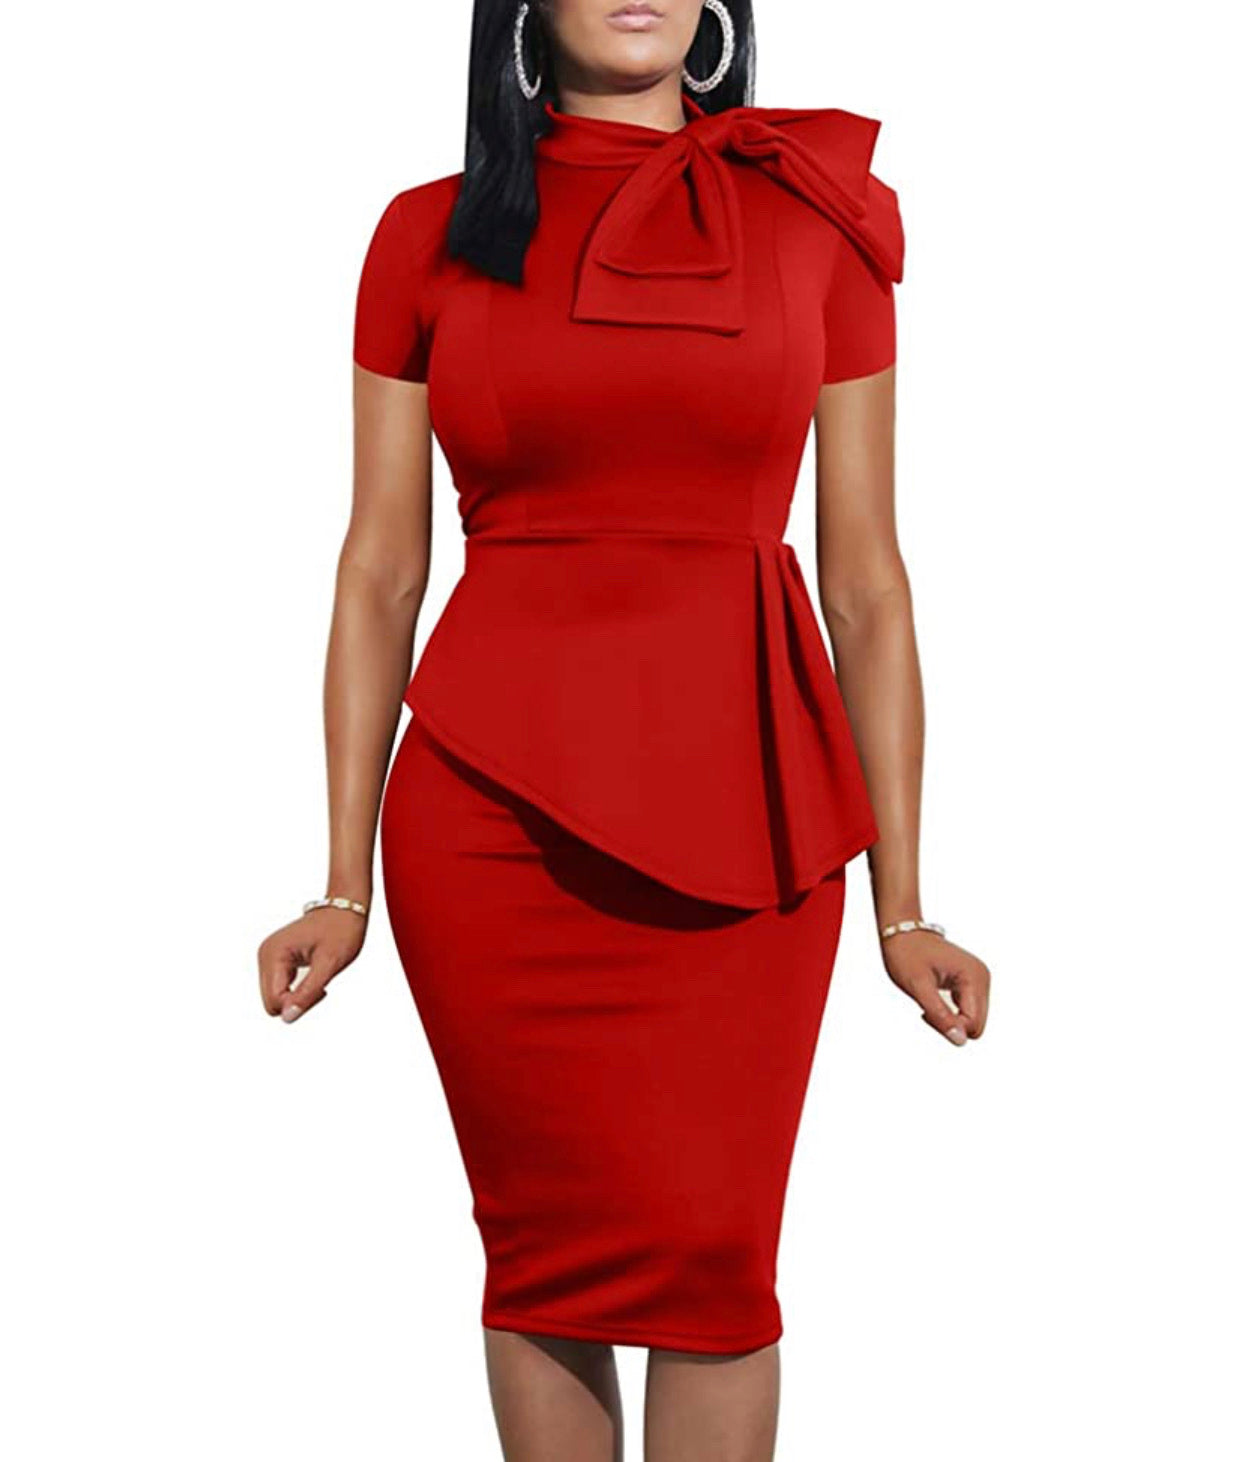 Peplum Short Sleeve Bow Knot Dress, US Sizes 4 - 20 (Small - 2XLarge) Red or White